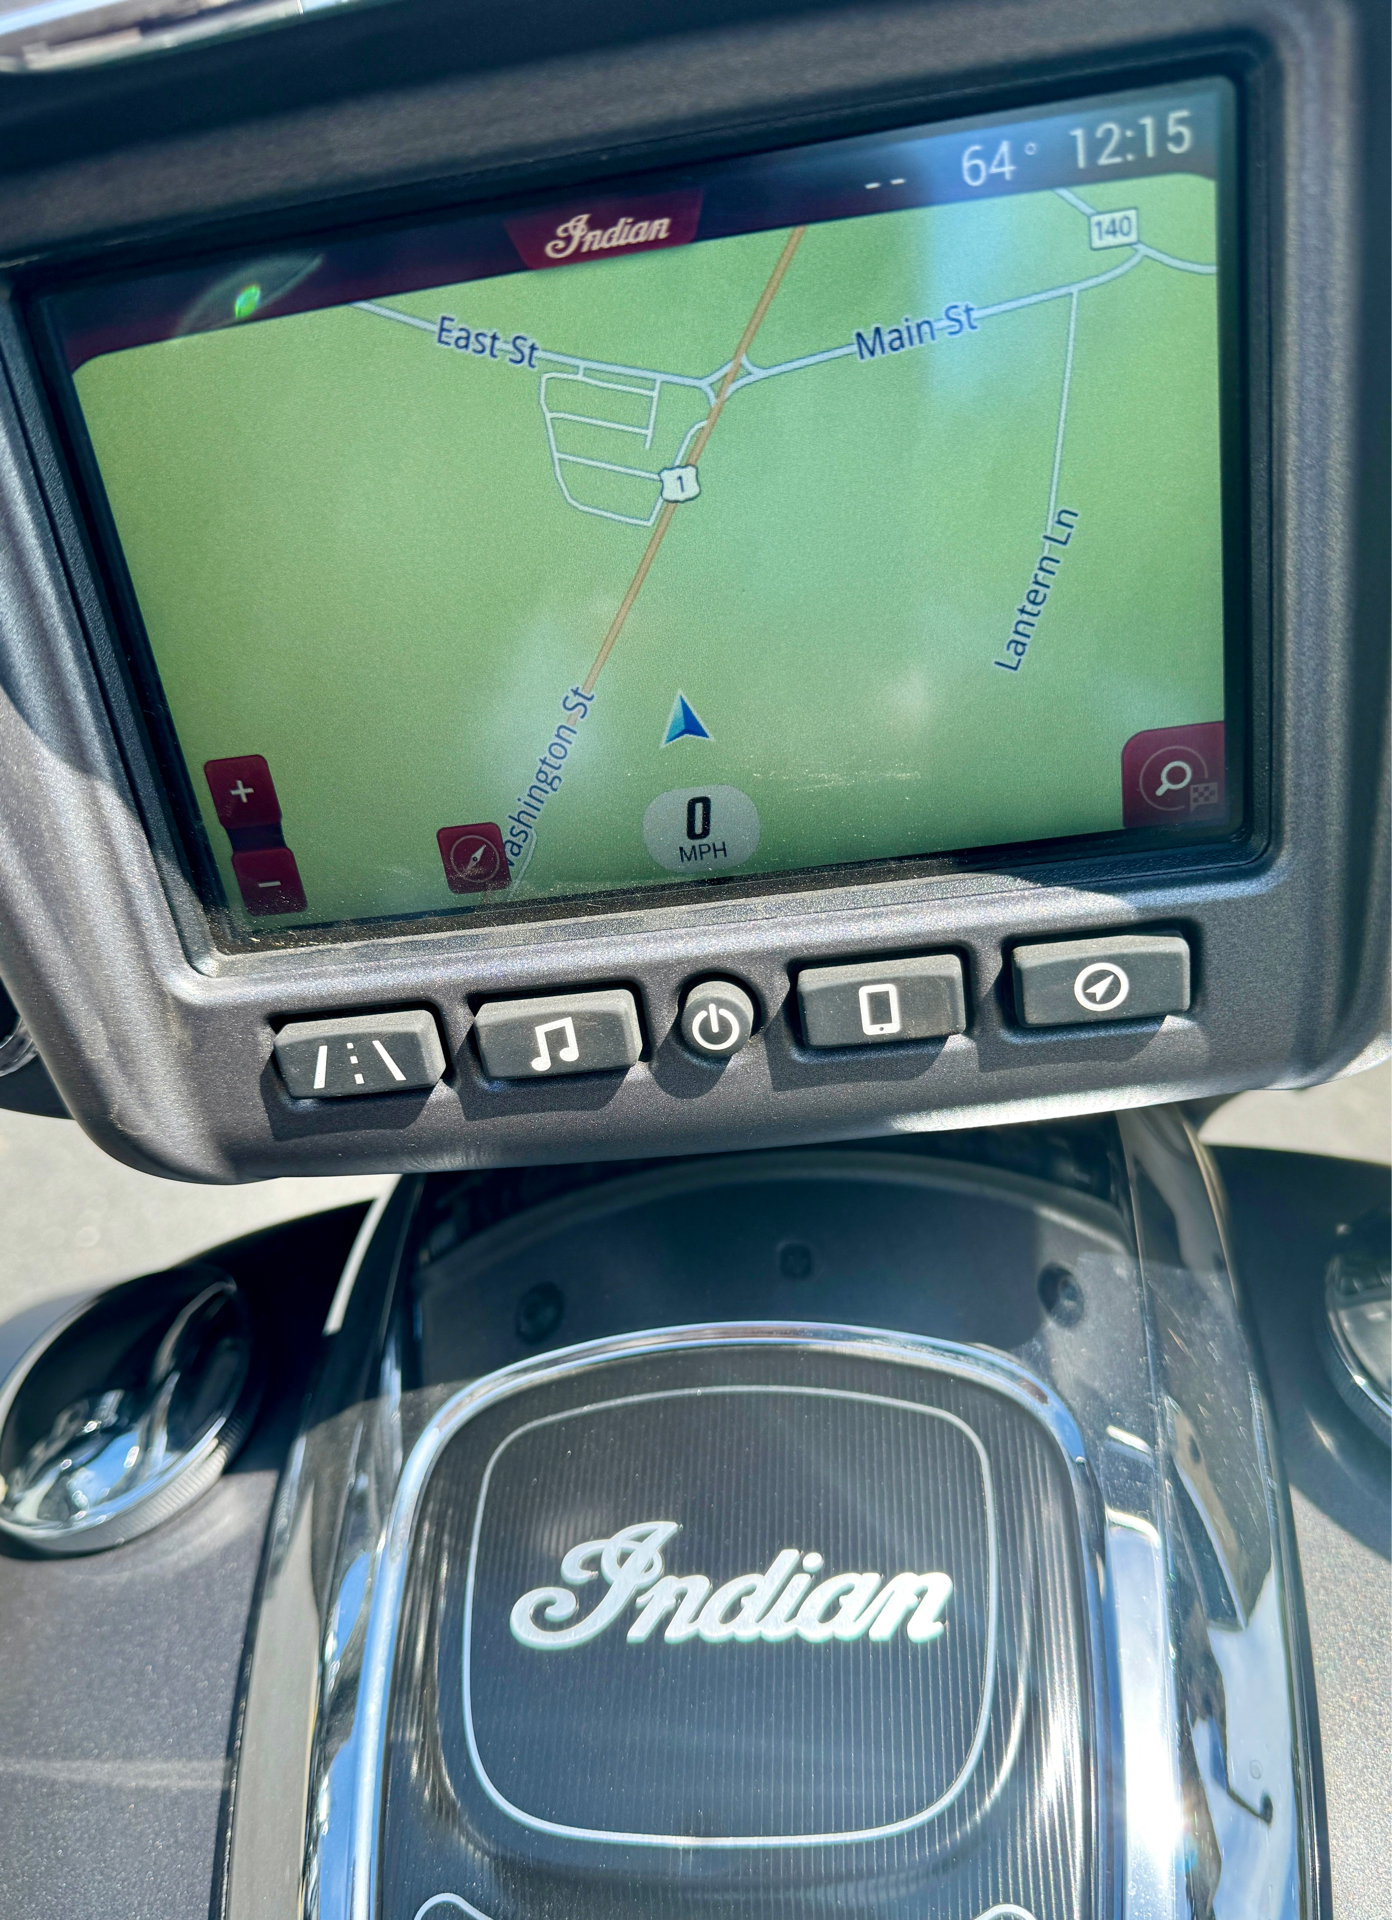 2019 Indian Motorcycle Roadmaster® ABS in Foxboro, Massachusetts - Photo 2